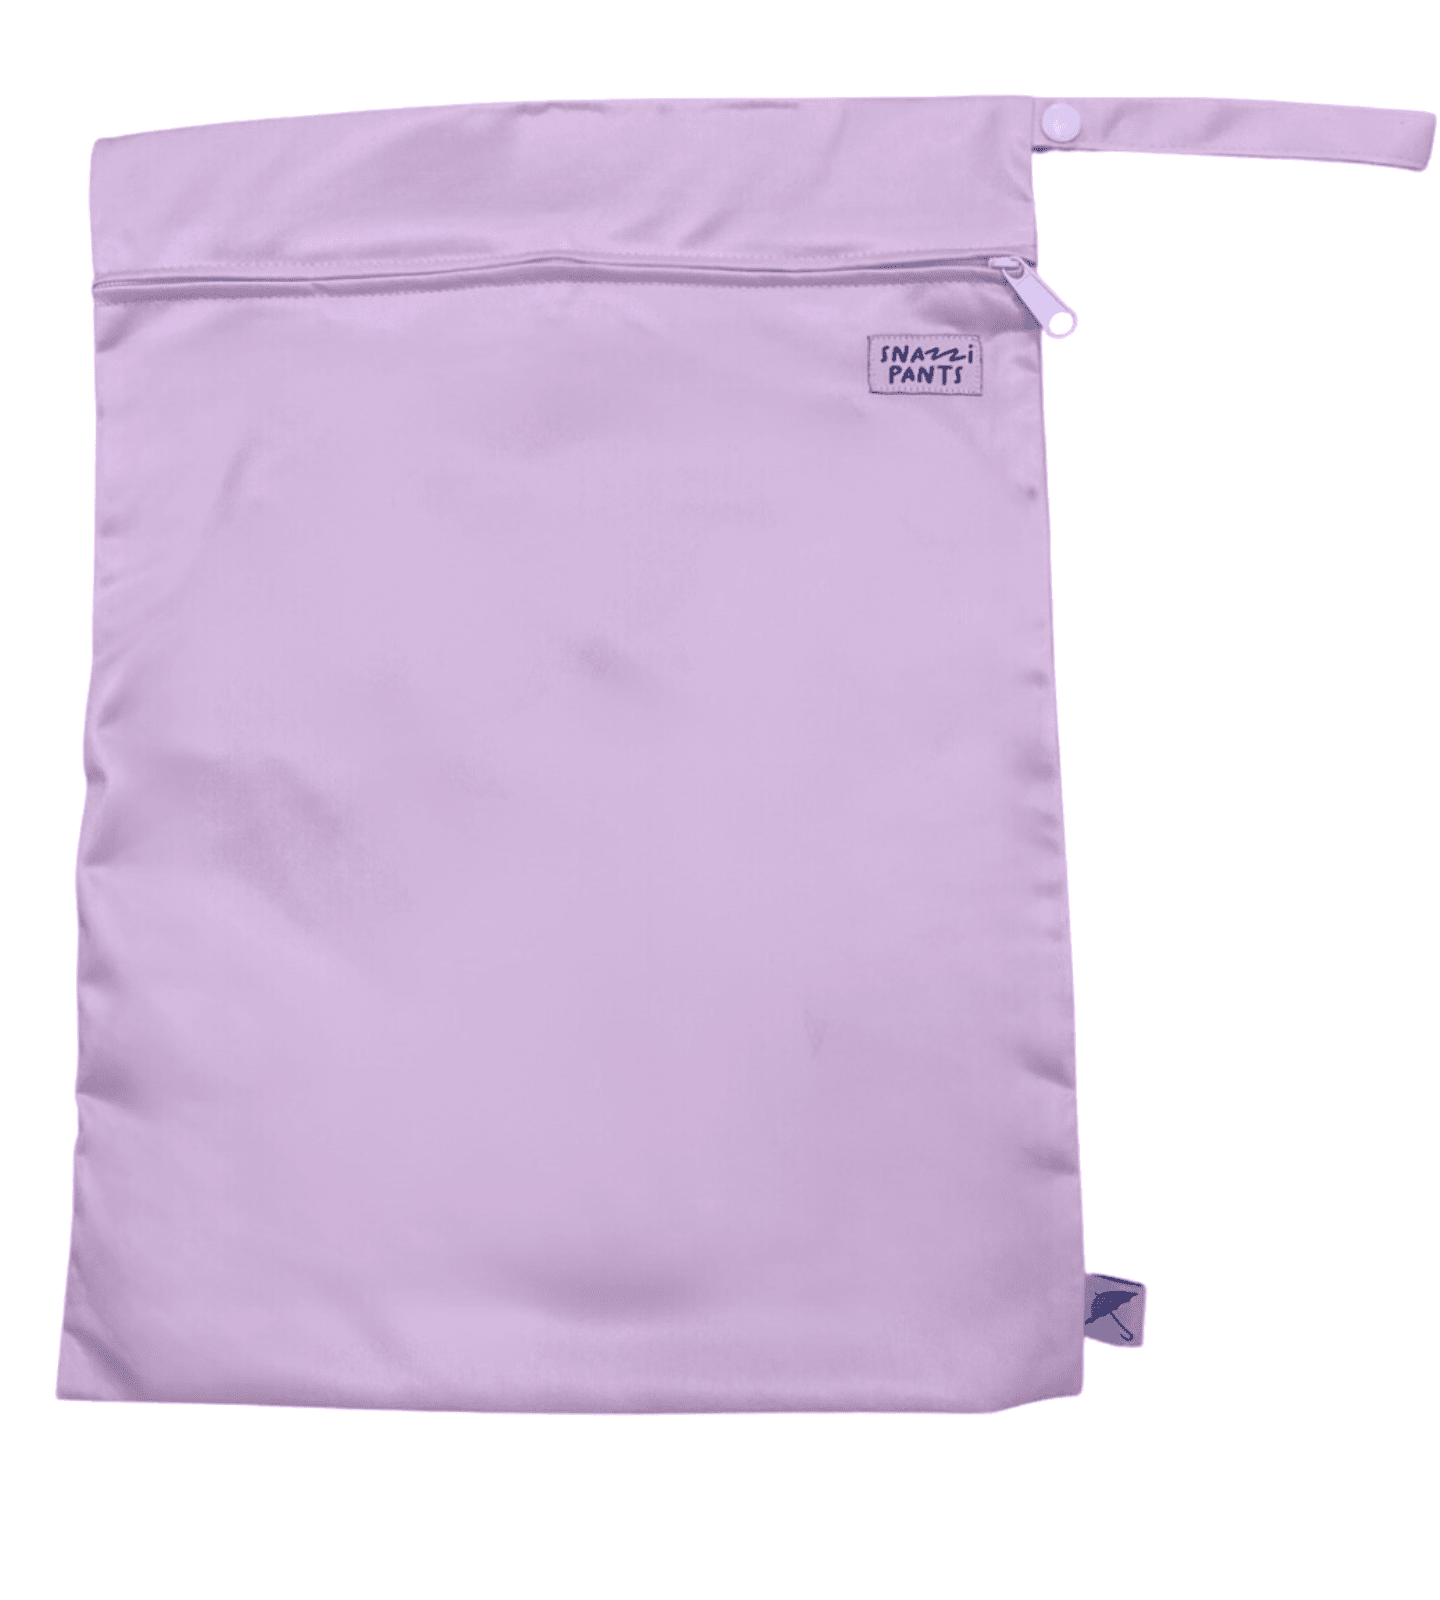 Snazzi Pants Wet Bag - Medium - Brolly Sheets NZ